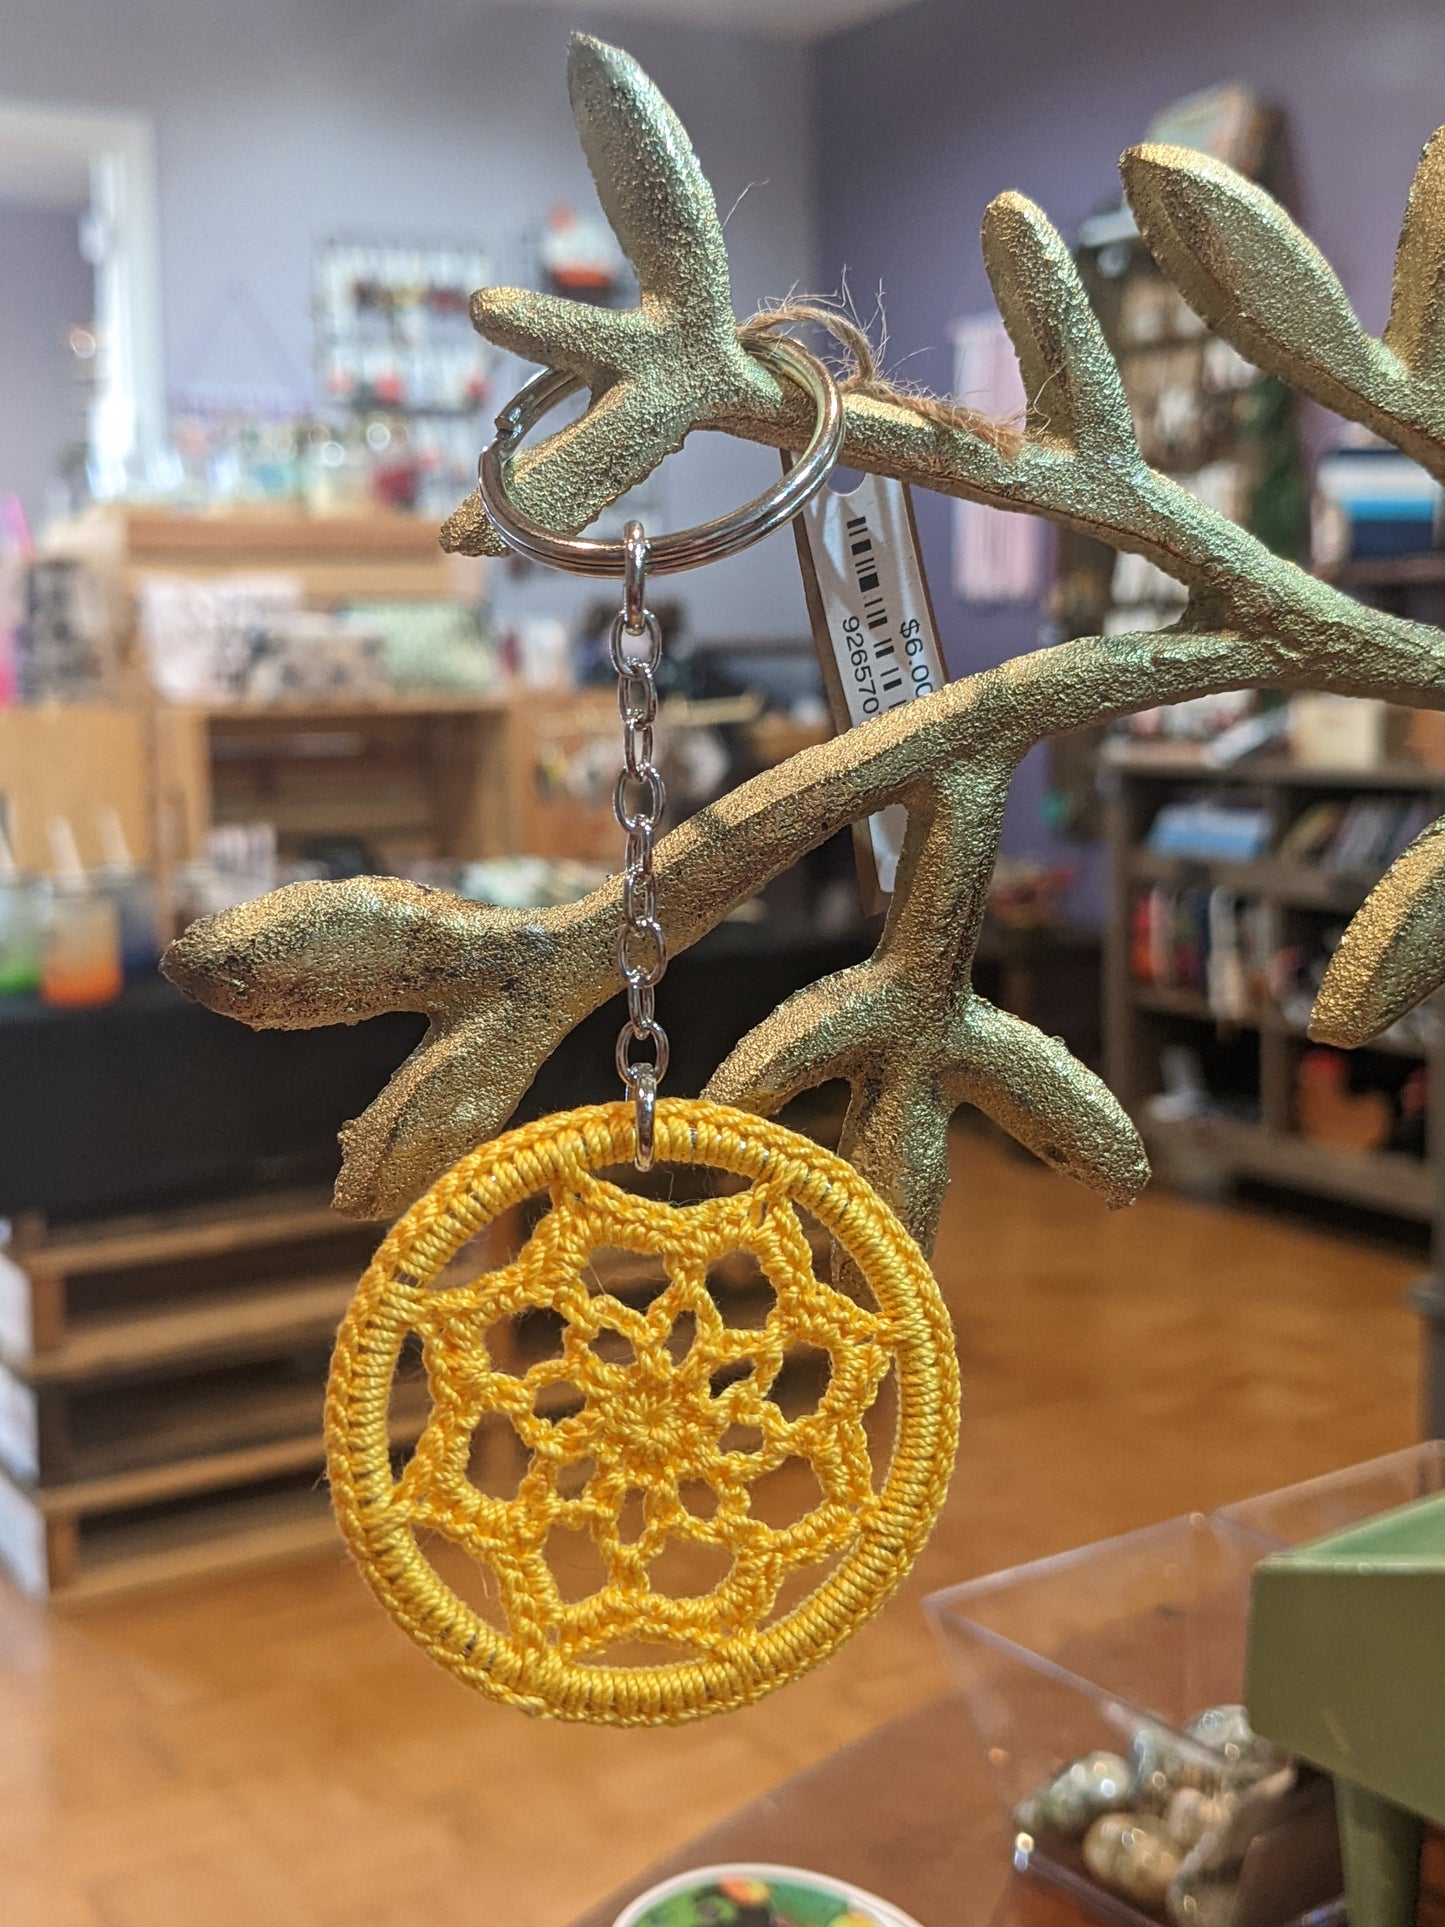 Crocheted Mandala: Mini Keychains